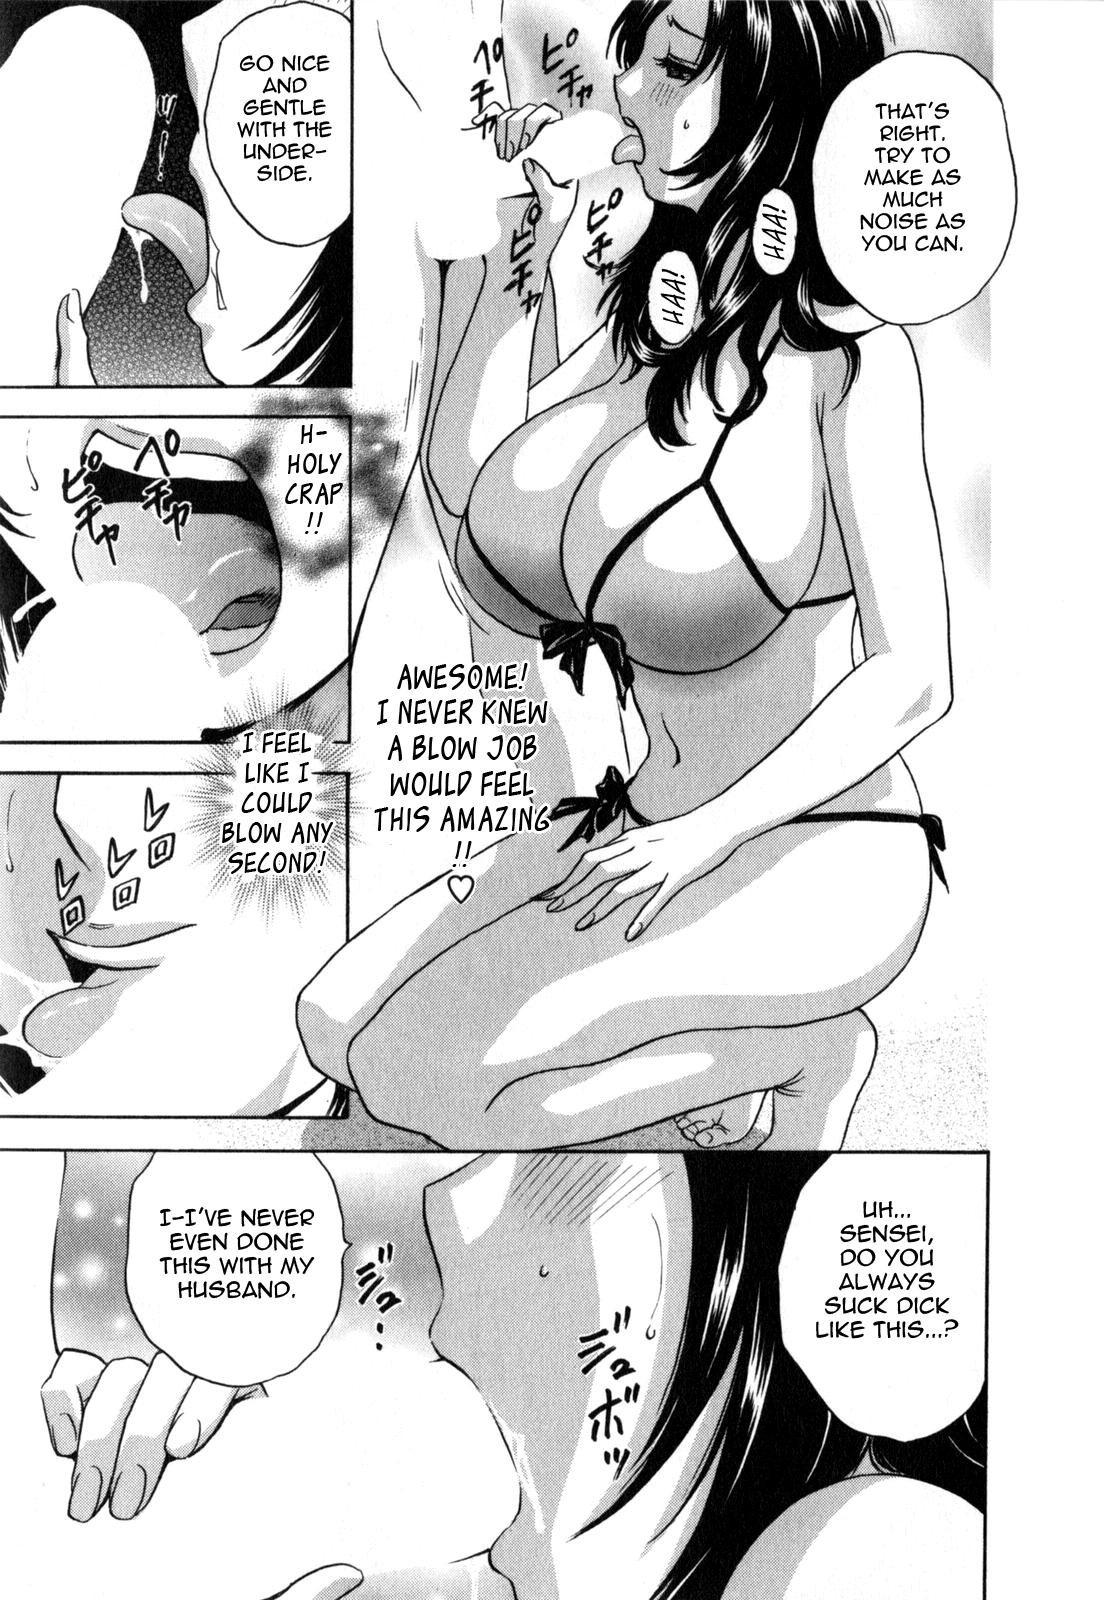 [Hidemaru] Life with Married Women Just Like a Manga 1 - Ch. 1-4 [English] {Tadanohito} 17